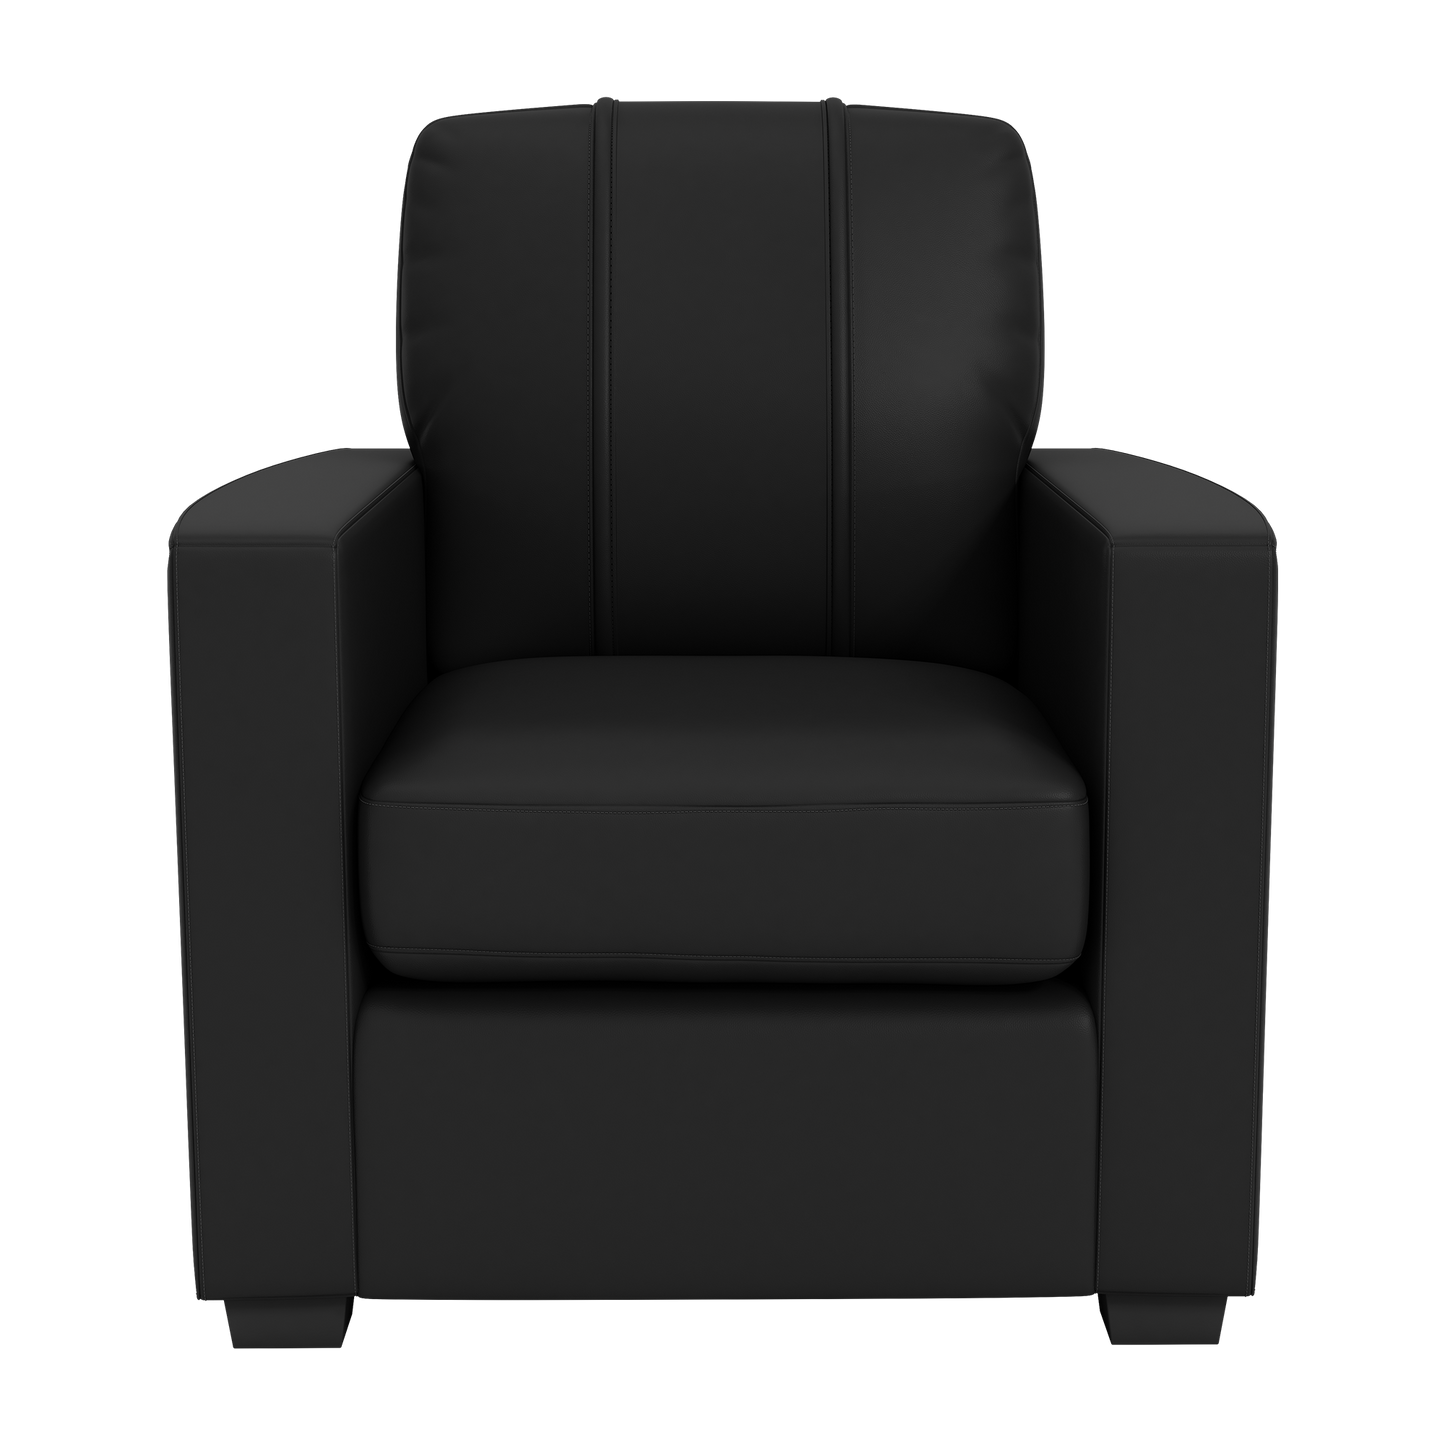 Silver Club Chair with  Houston Texans Helmet Logo